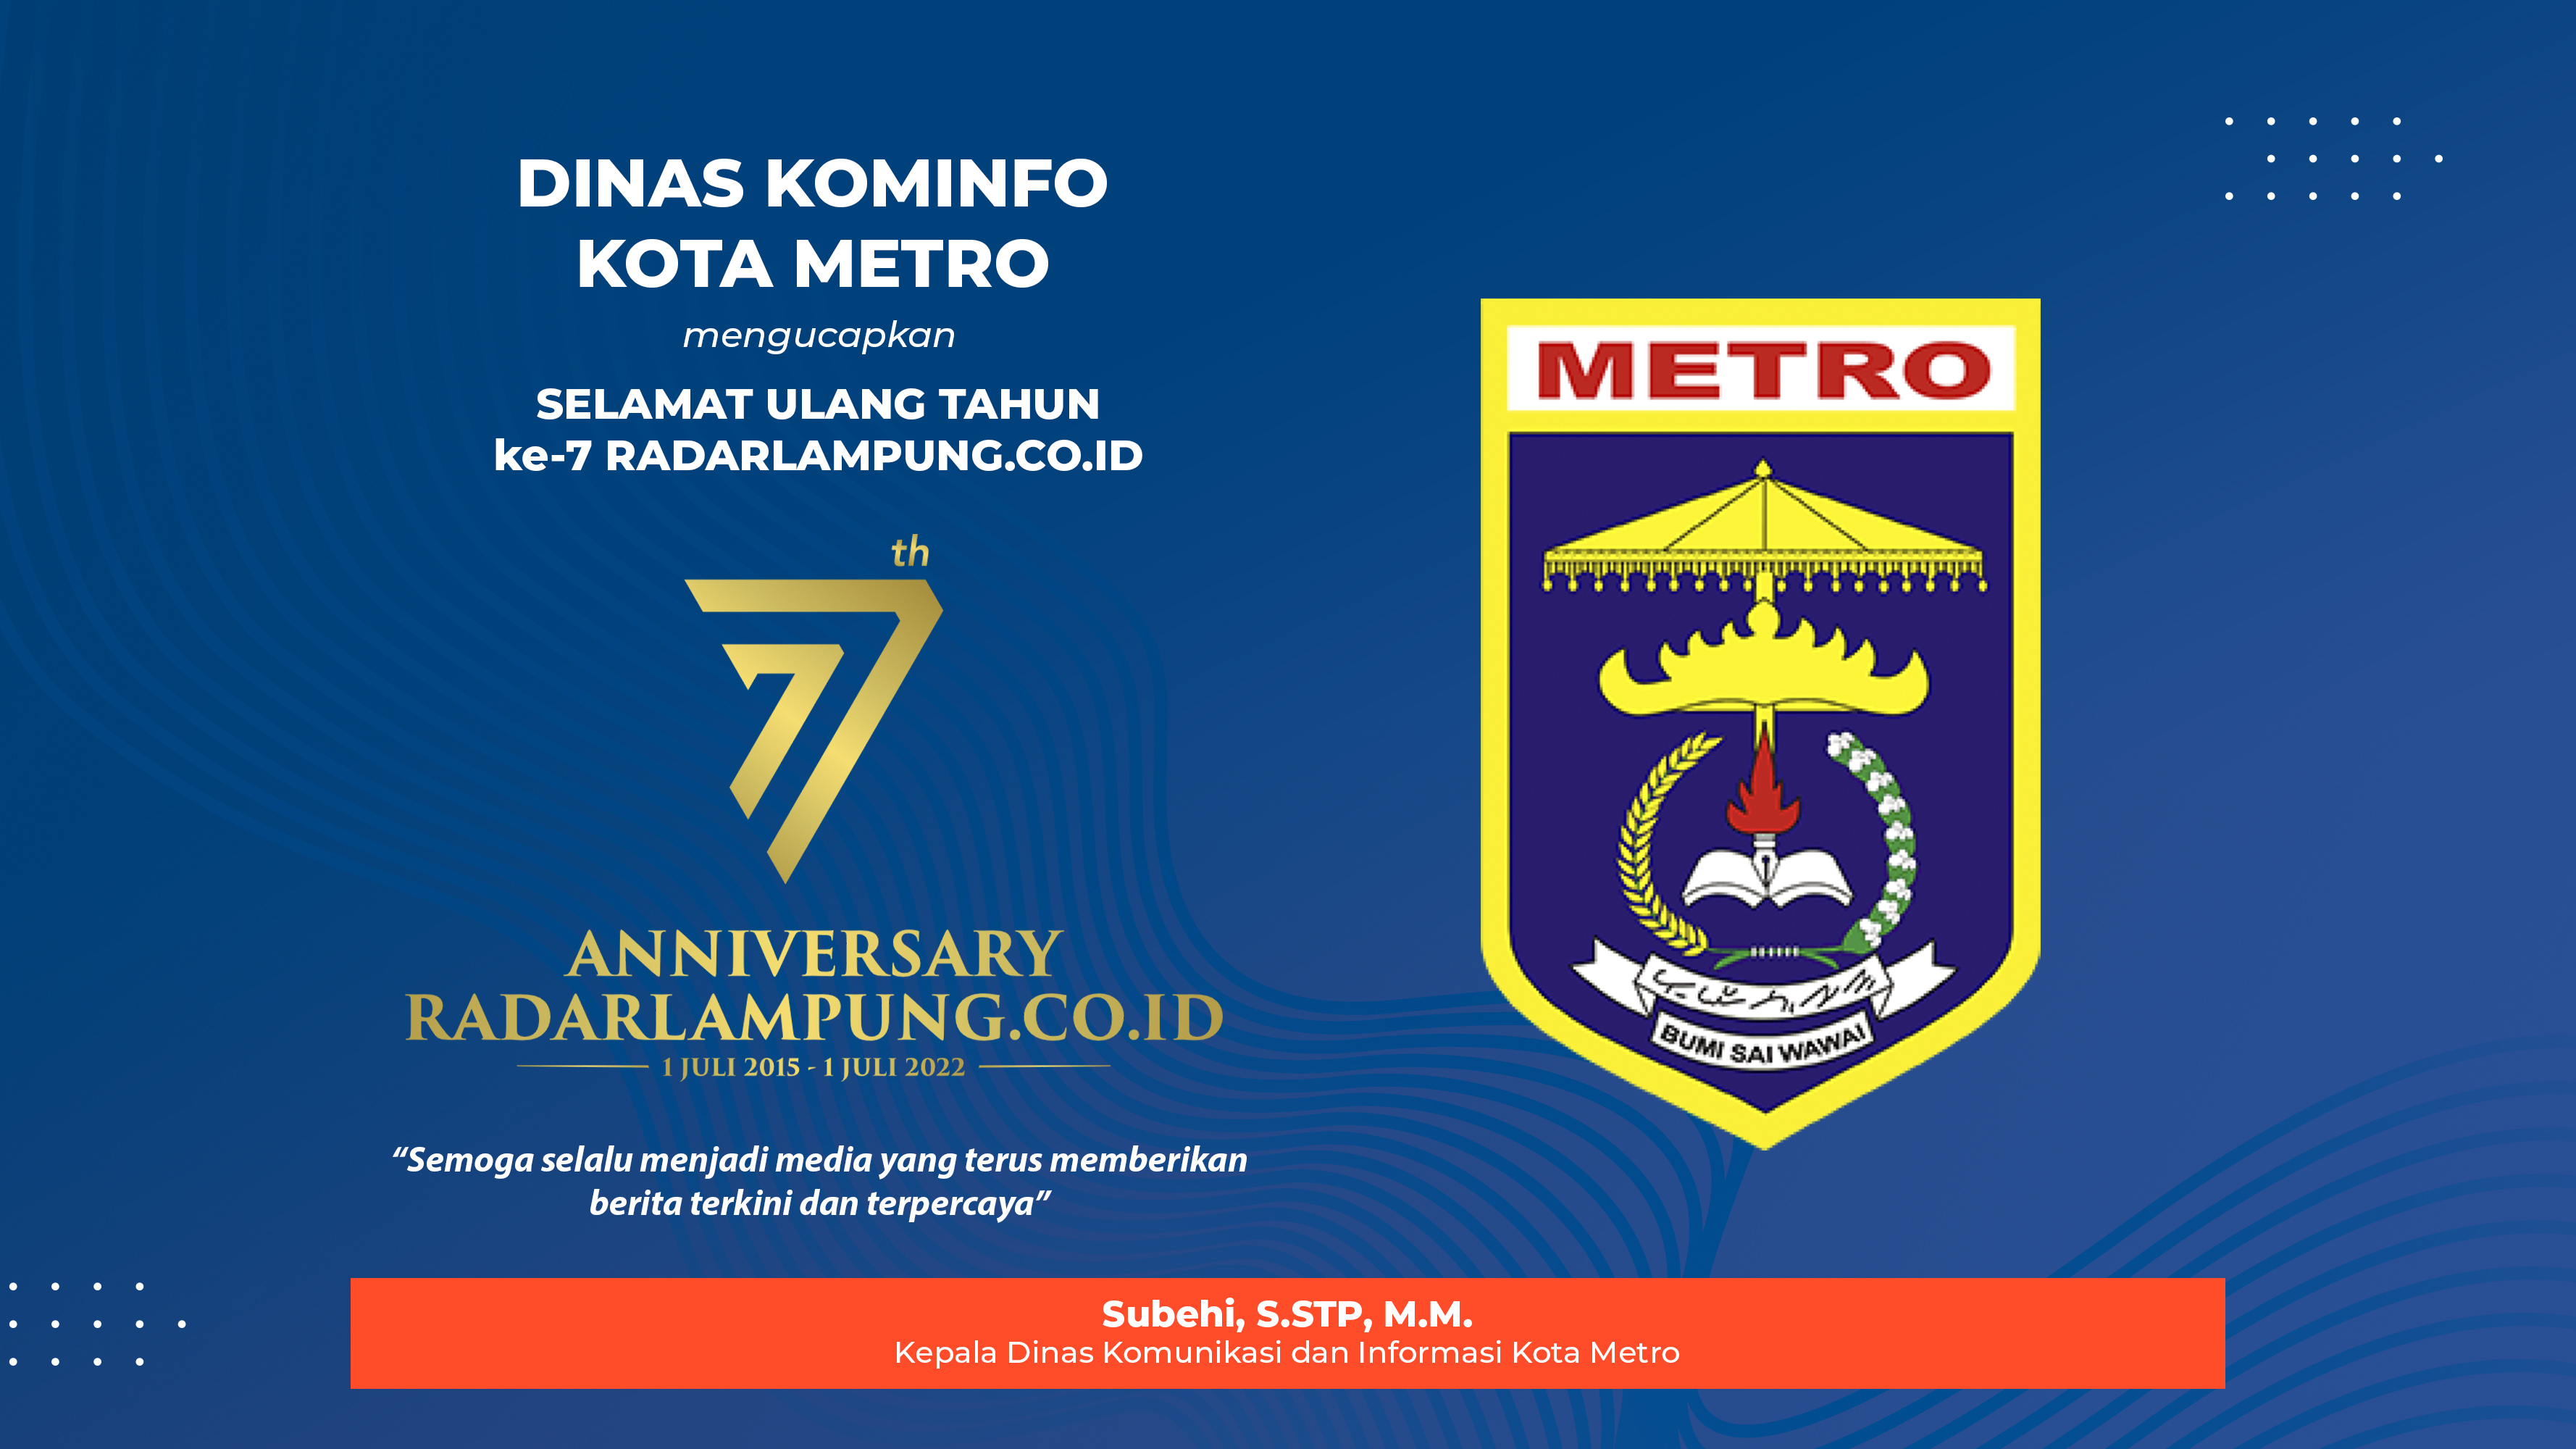 Dinas Kominfo Kota Metro Mengucapkan Selamat Ulang Tahun ke-7 Radarlampung.co.id